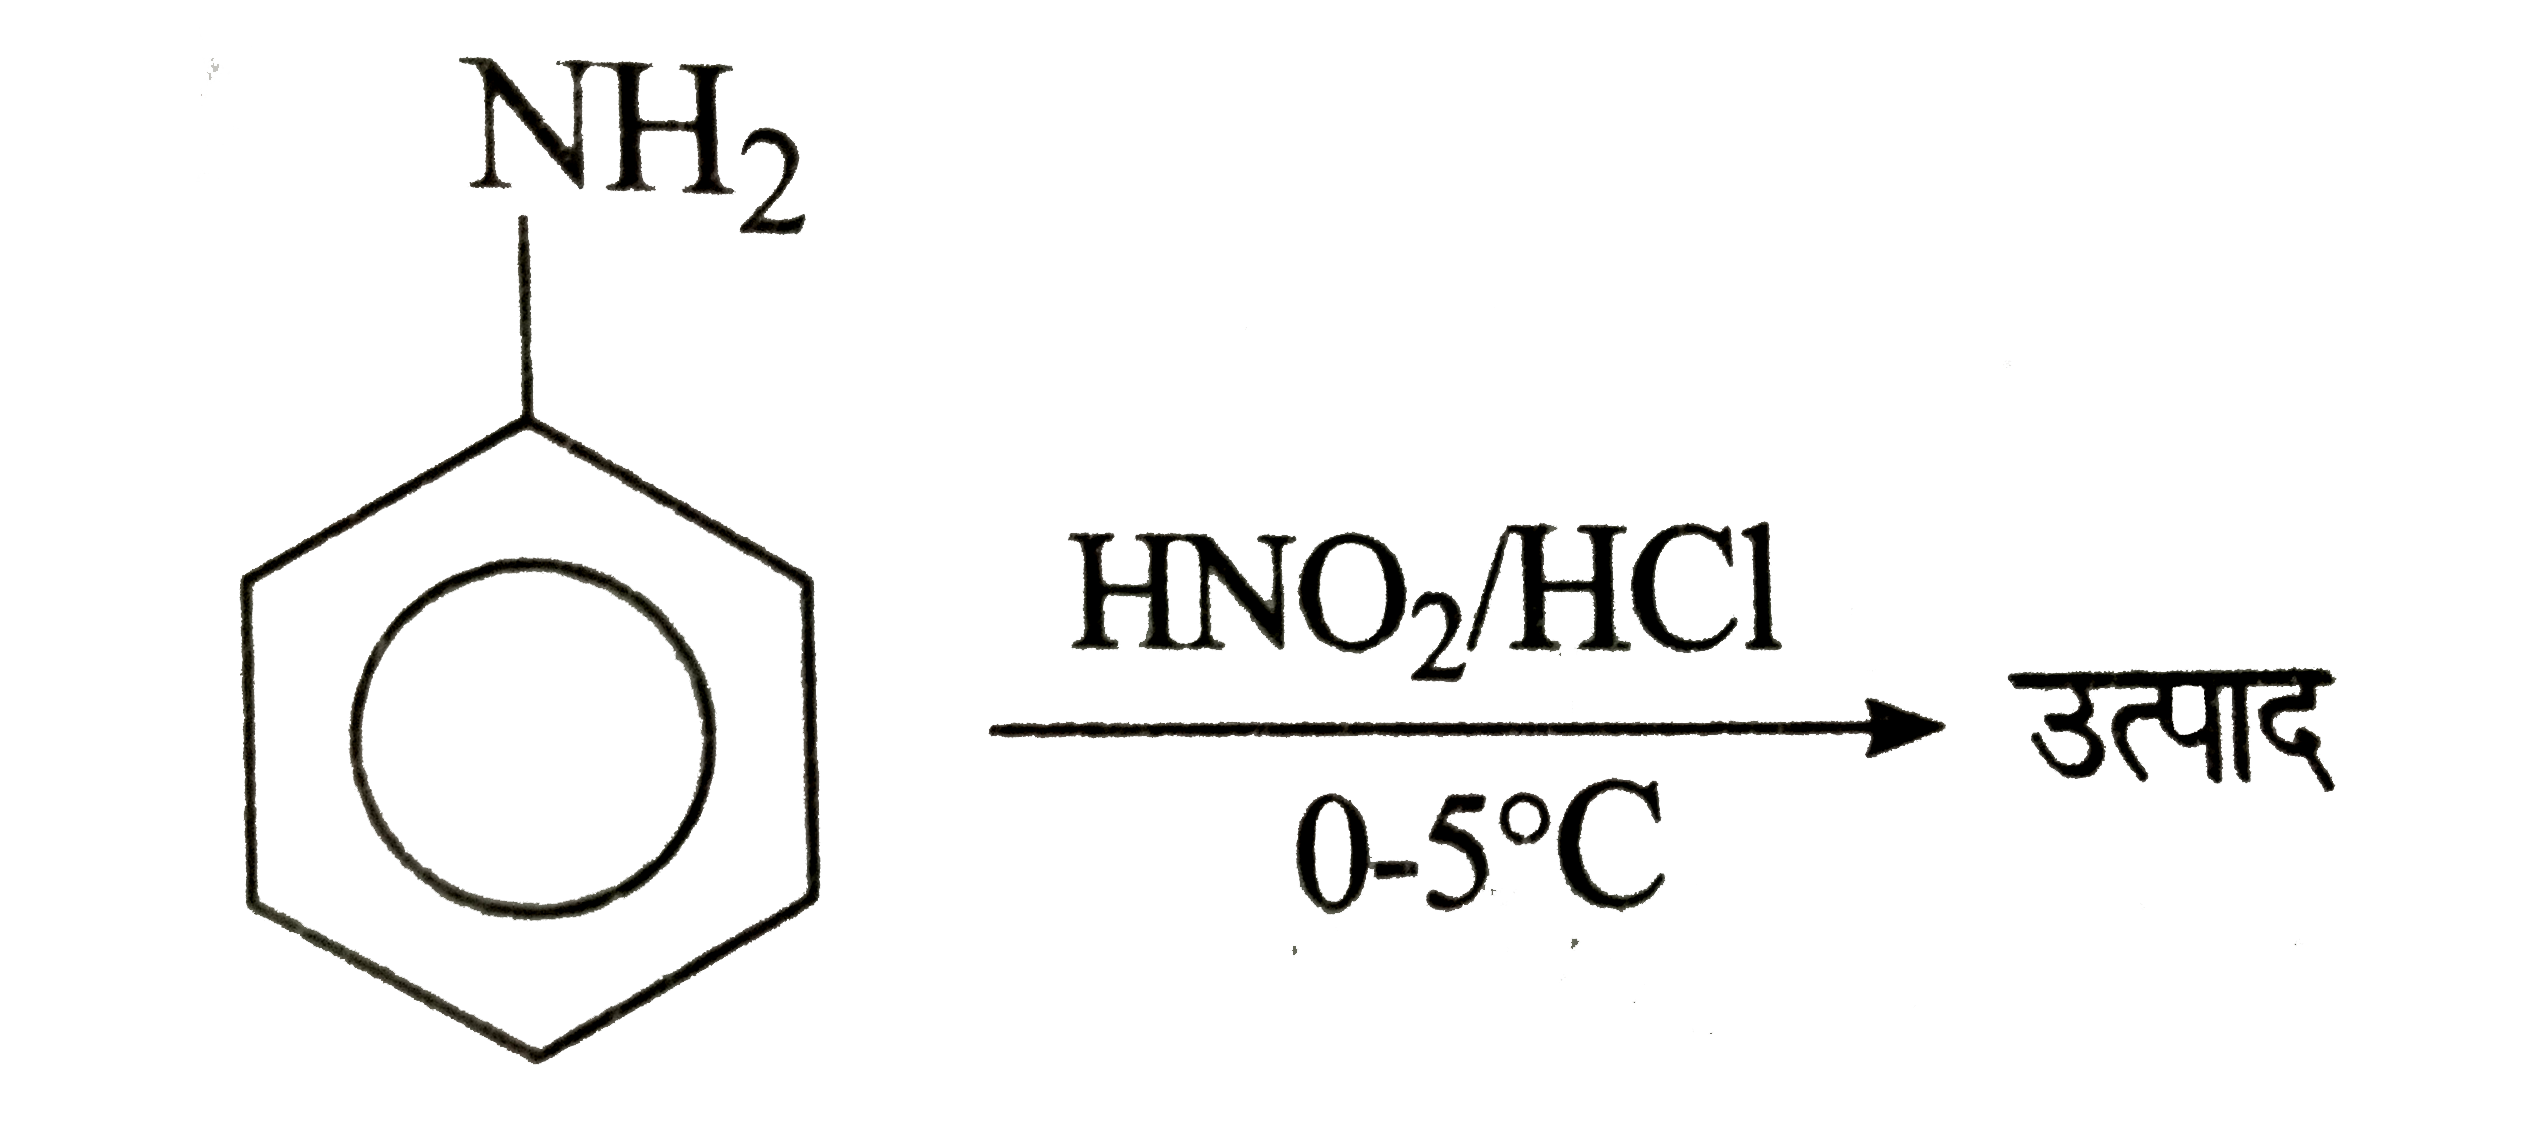 underset(0-5^(@)C)overset(HNO(2)//HCl)(to) उत्पाद उपरोक्त अभिक्रिया कहलाती है: